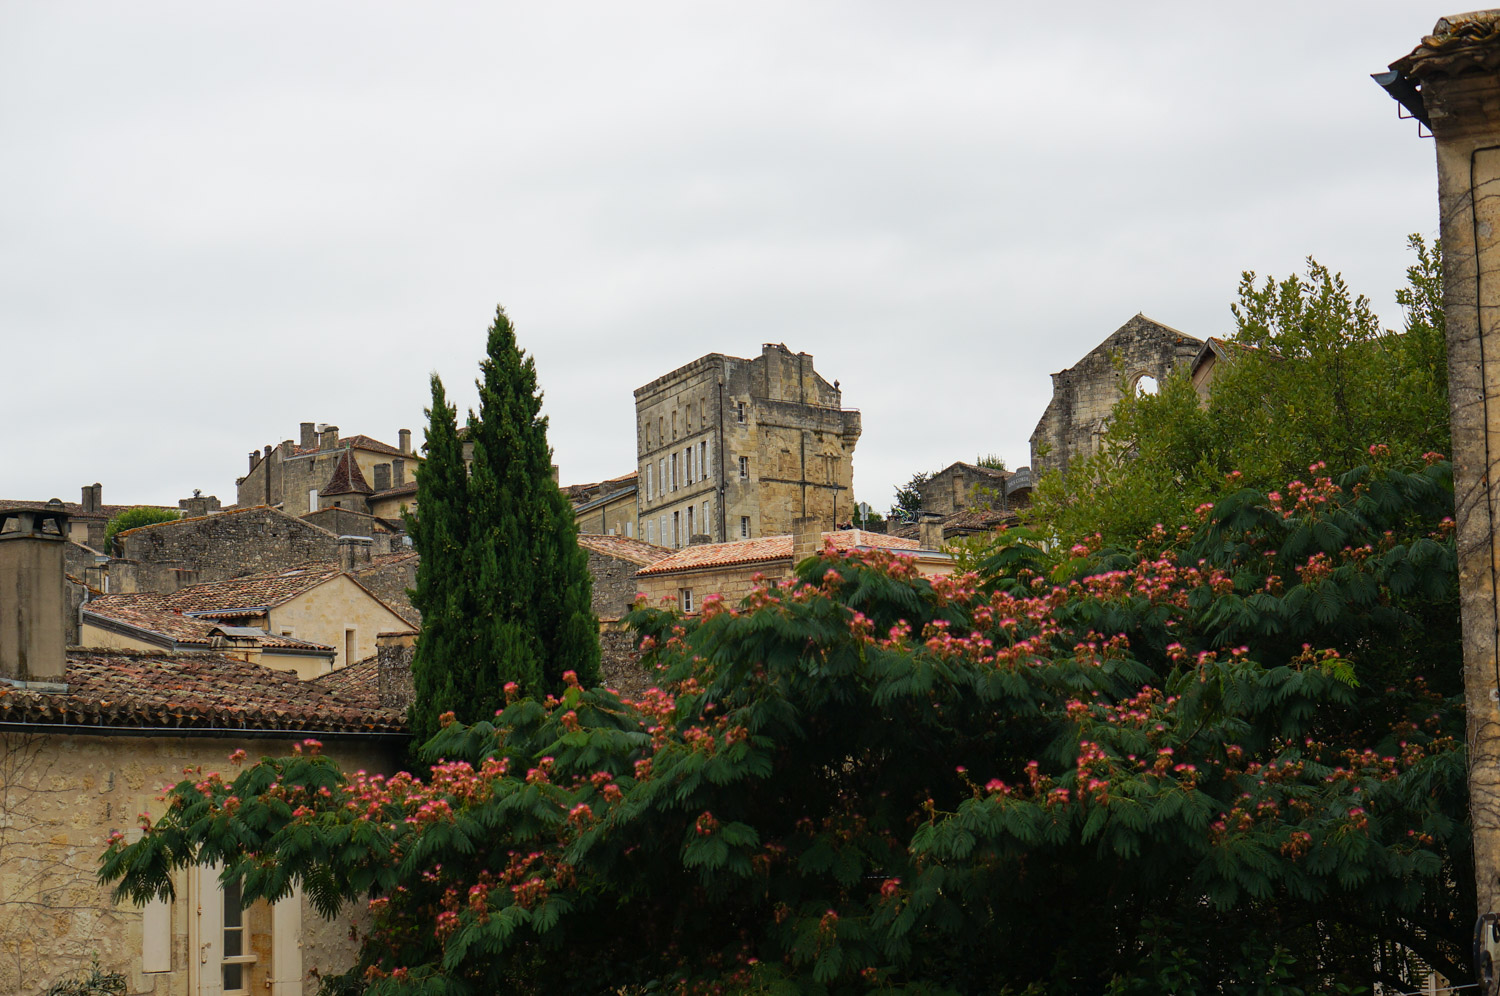 saint-émilion, saint-emilion, st-émilion, st-emilion, bordelais, tourisme bordelais, tourisme aquitaine, village médiéval